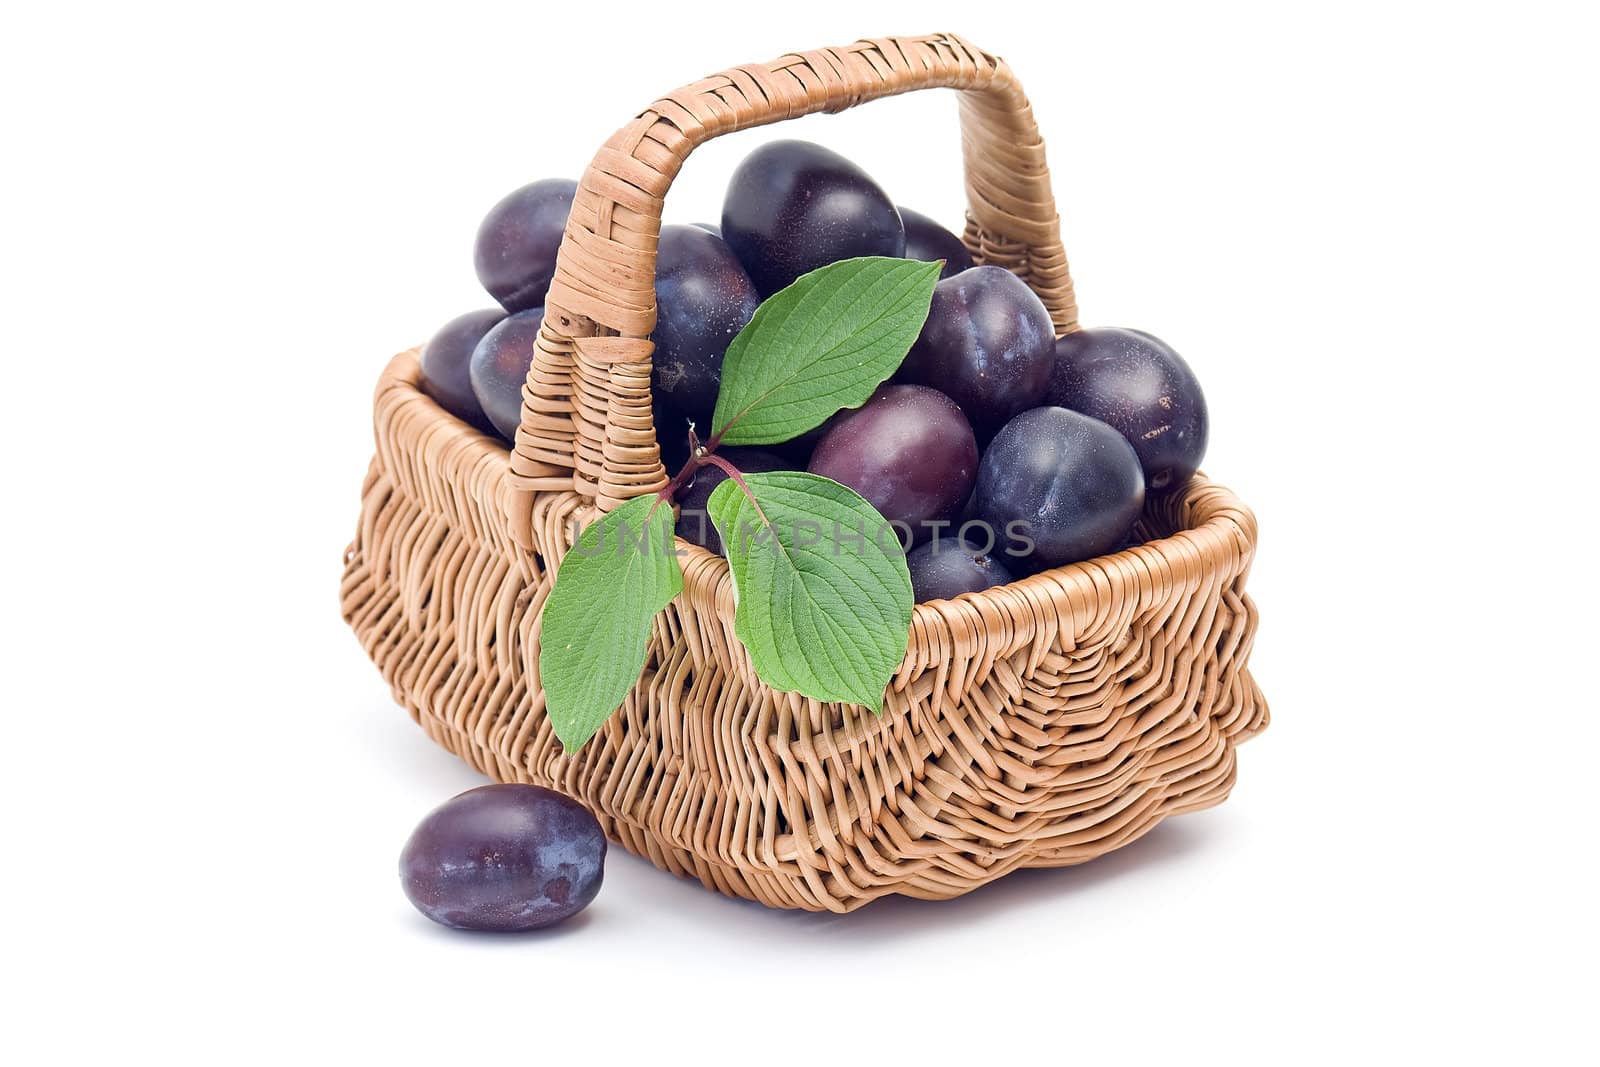 basket full of fresh plums by miradrozdowski